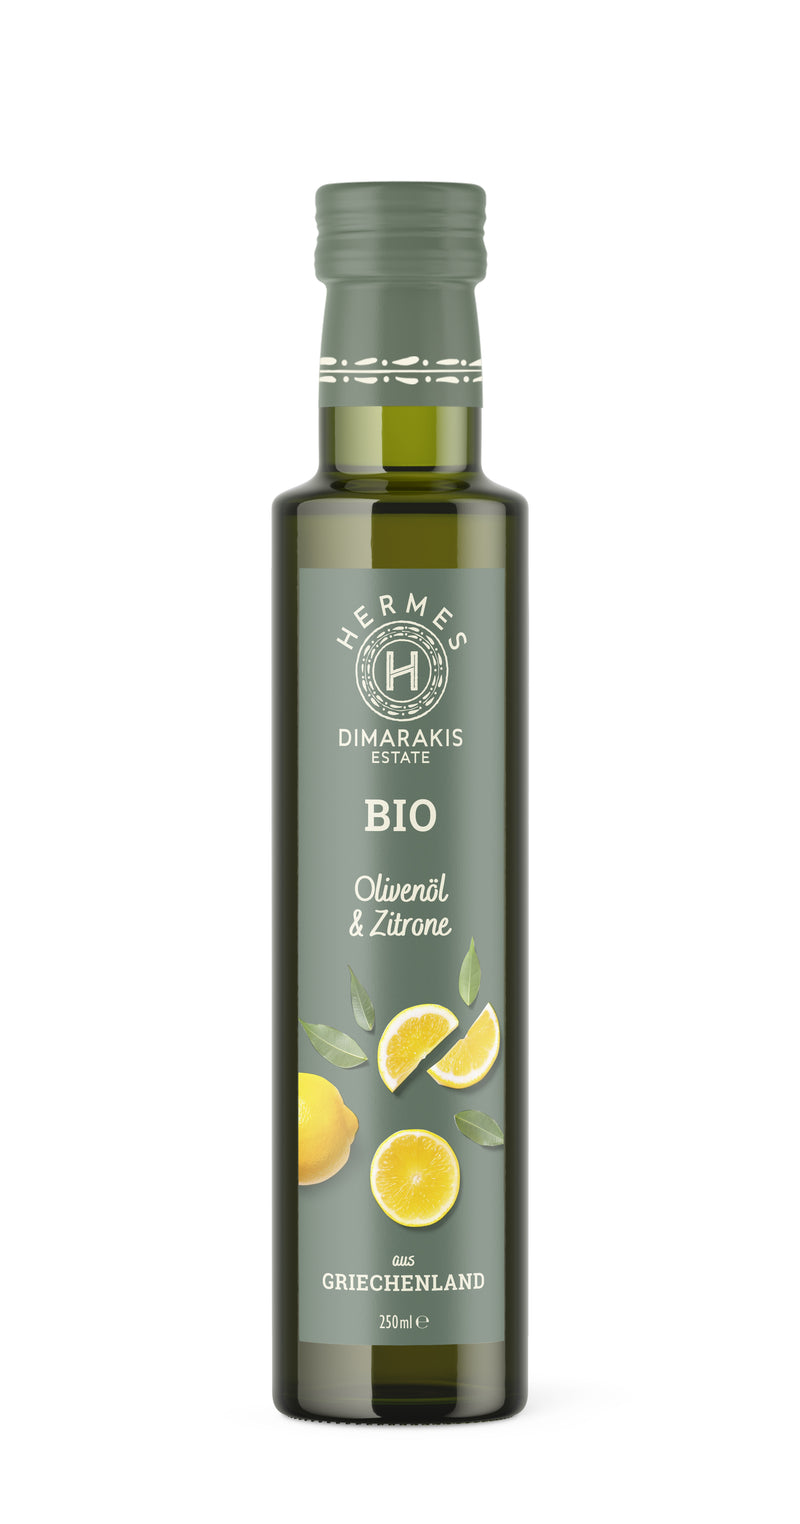 Front label of bottle of Hermes Organic Extra Virgin Olive Oil with lemon